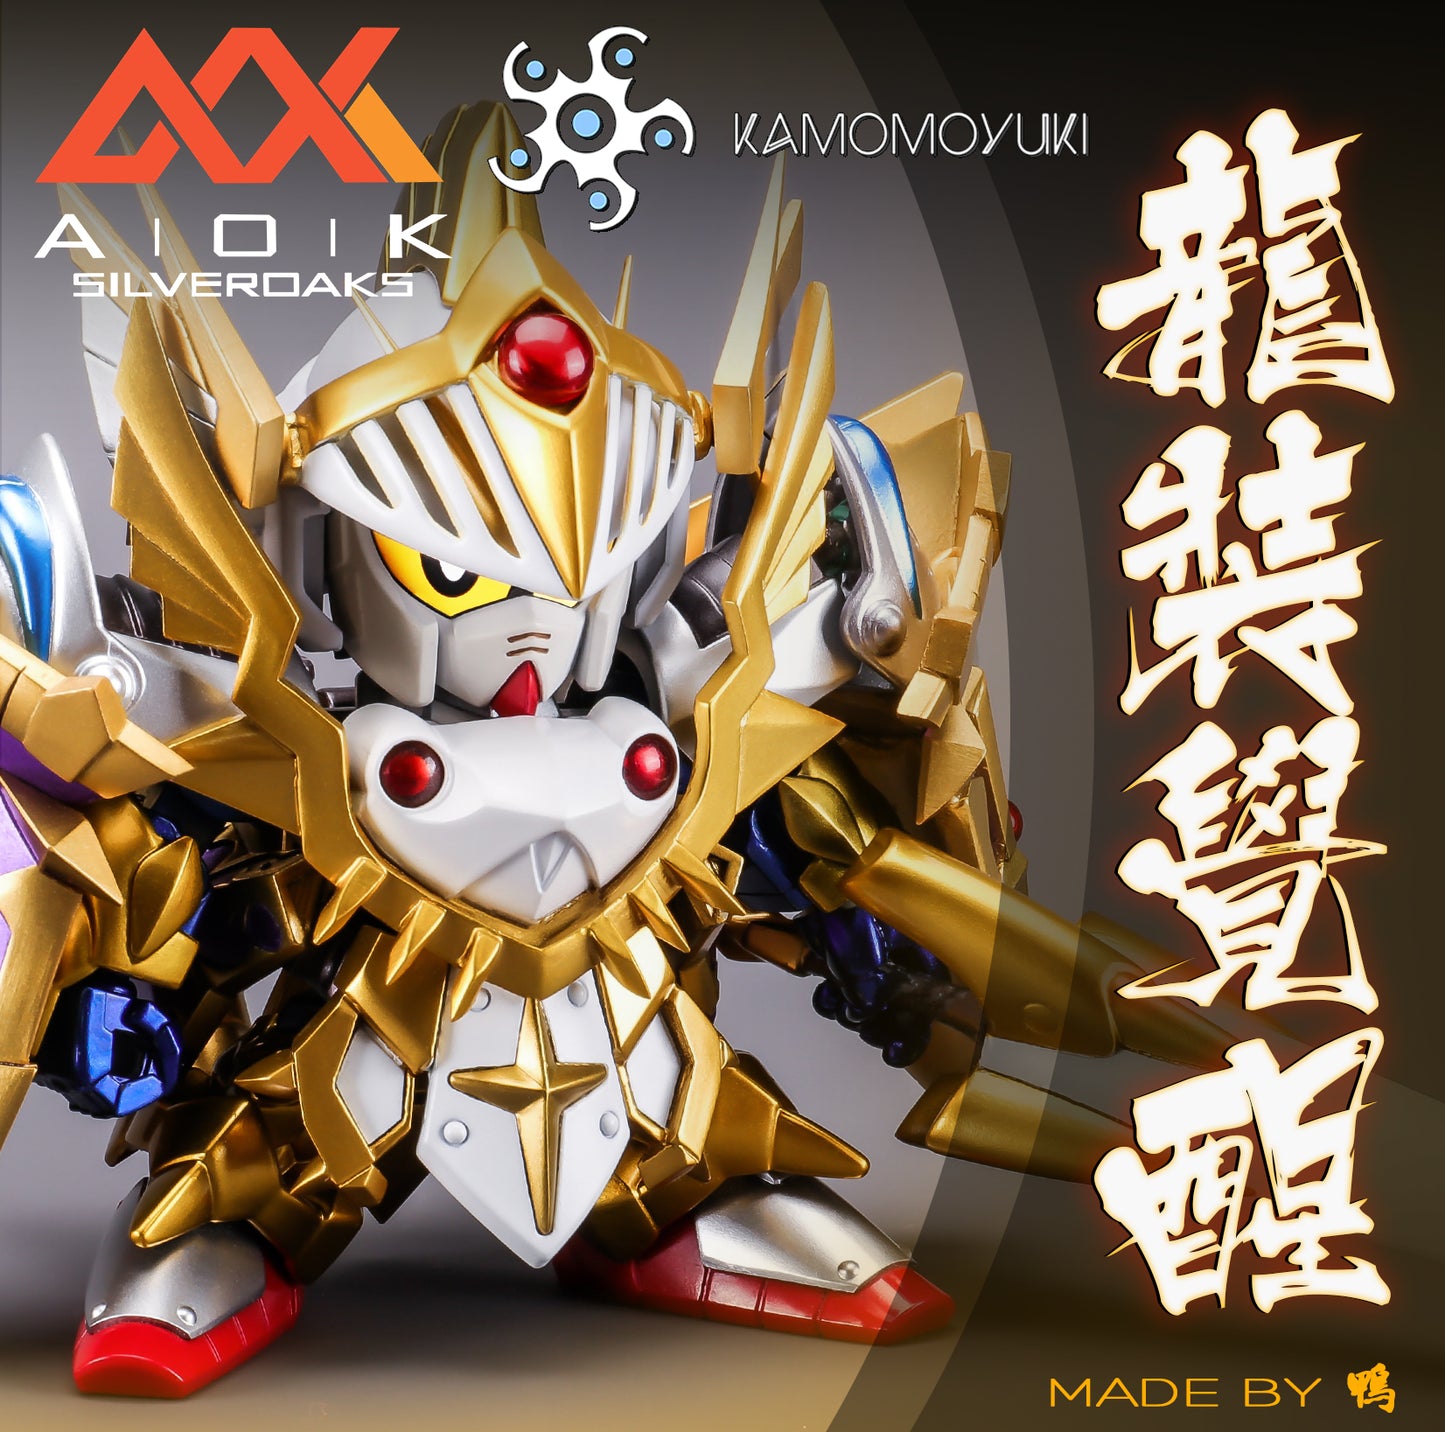 AOK Silveroaks - SD Versal Knight [Awakening] Resin Conversion Kit - ShokuninGunpla